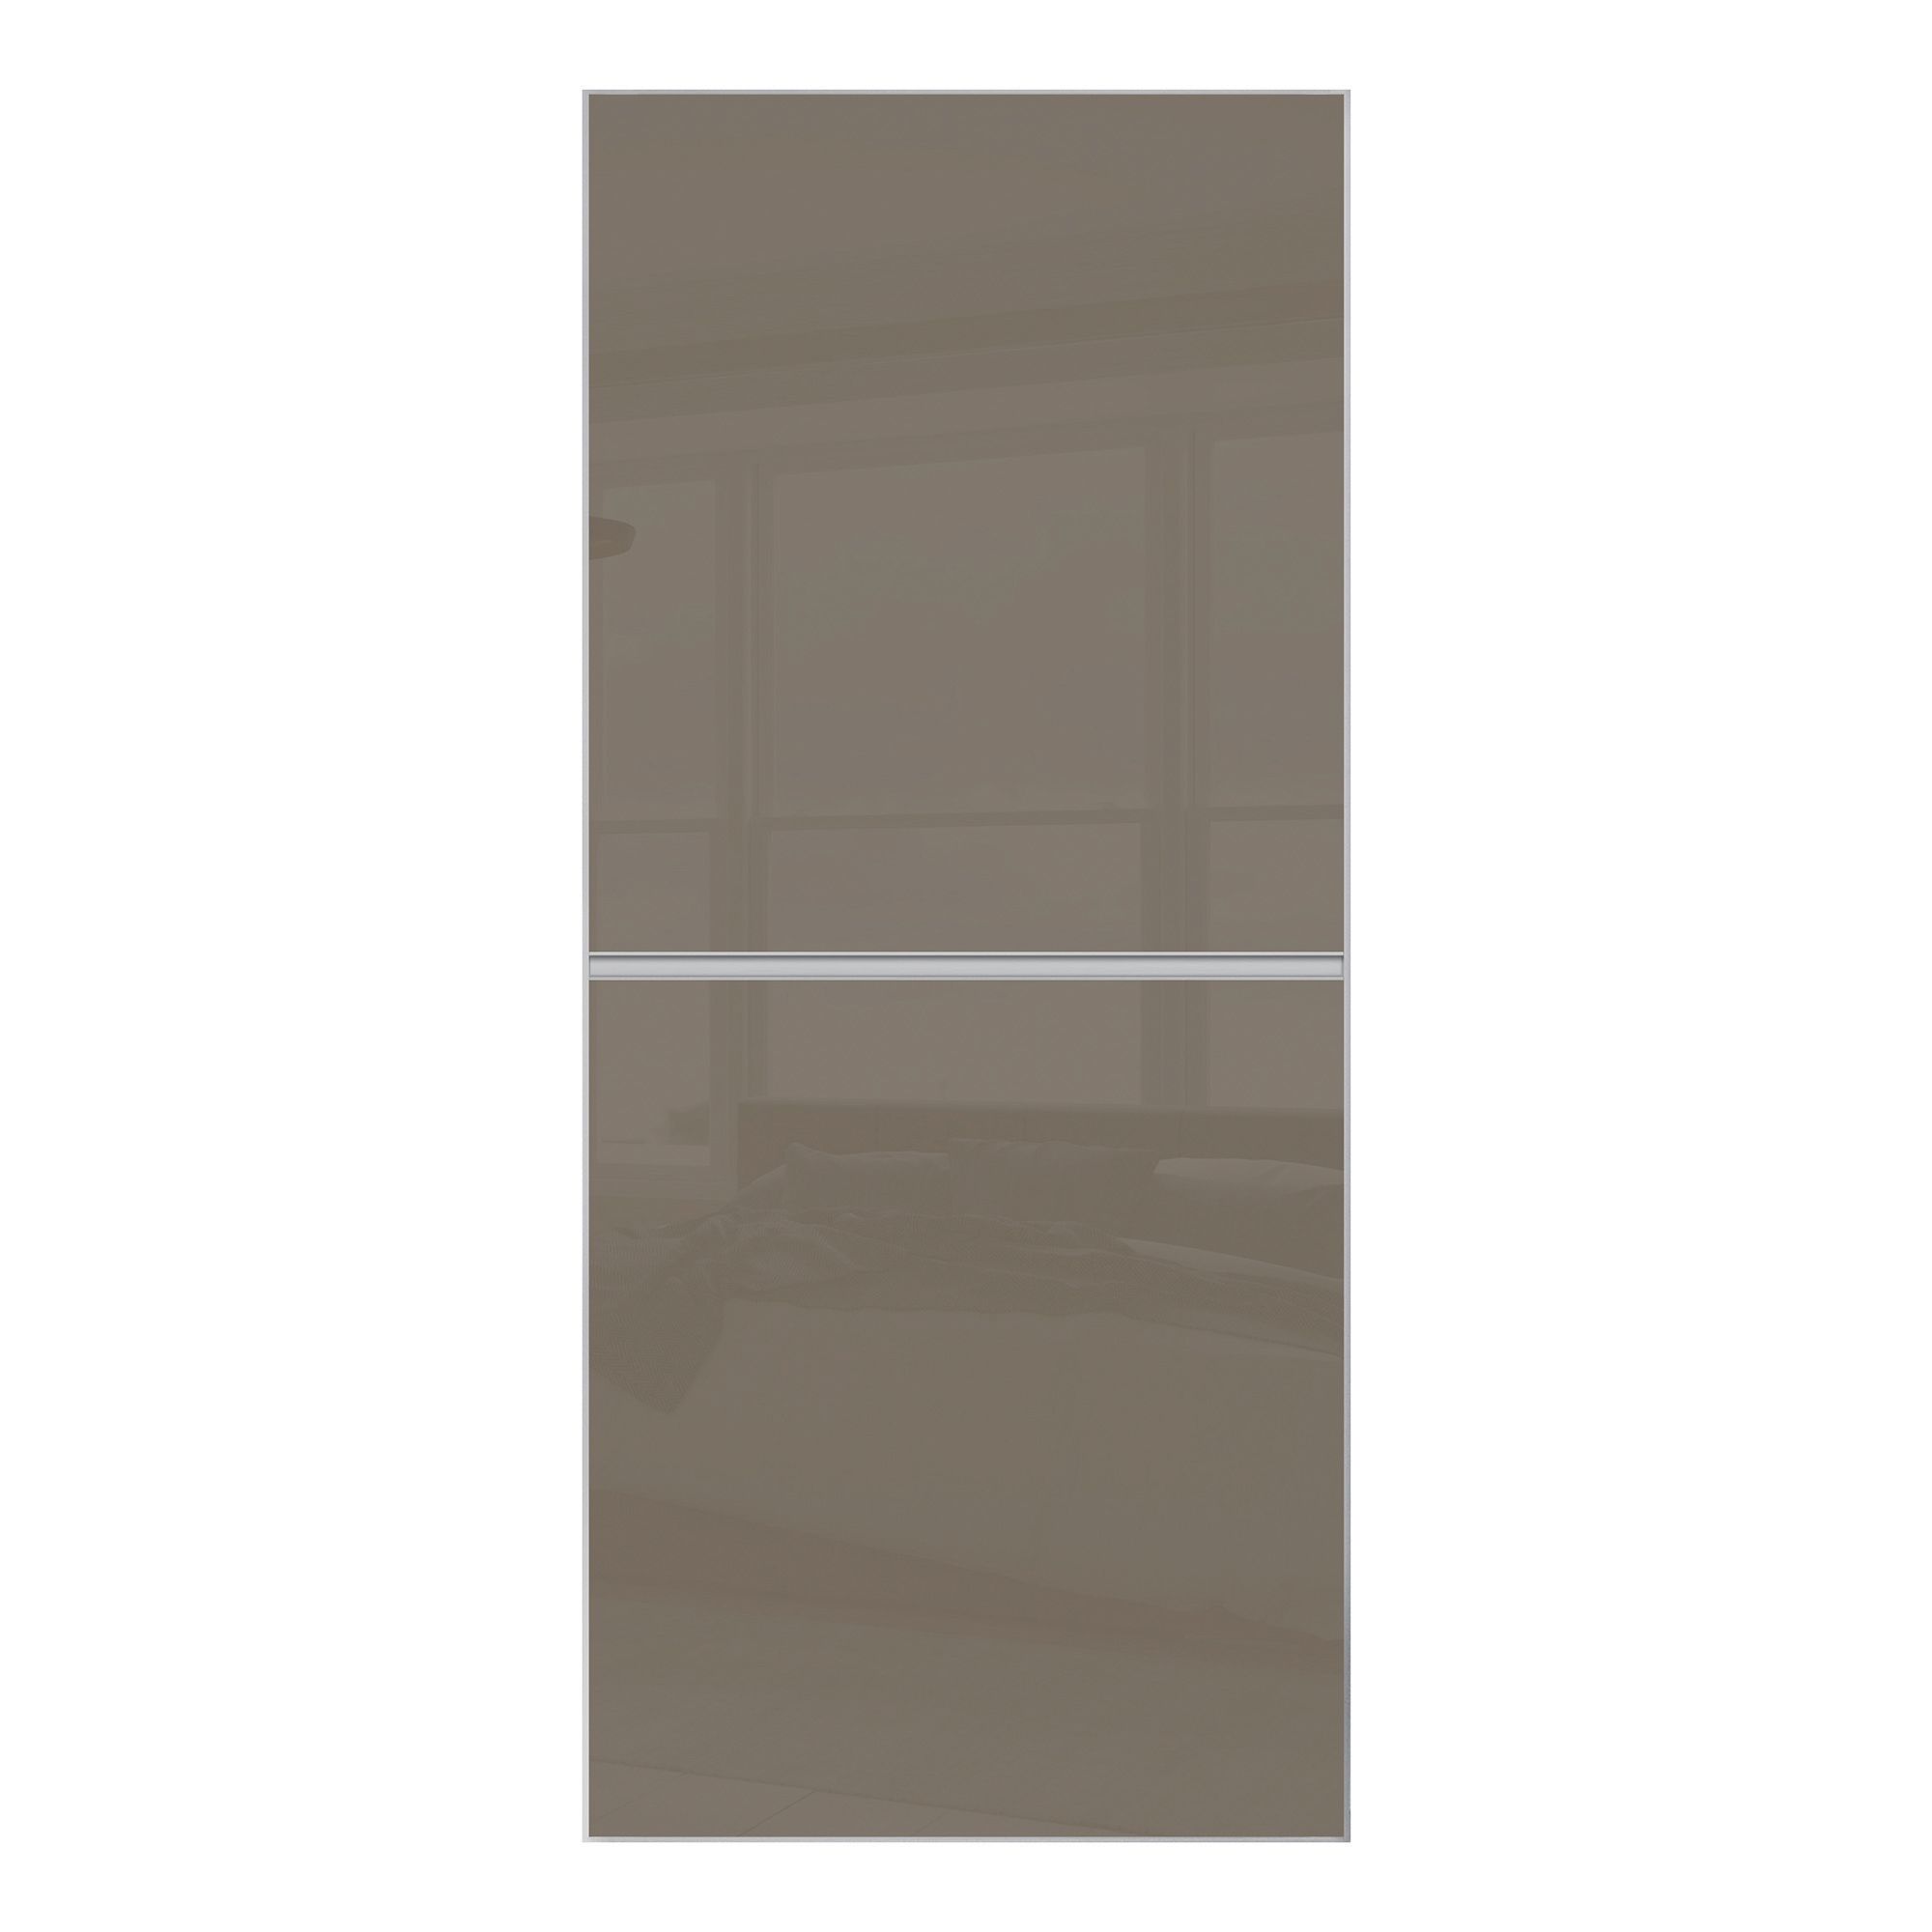 Image of Spacepro Minimalist Sliding Wardrobe Door 2 Panel Silver Frame Cappuccino - 610mm